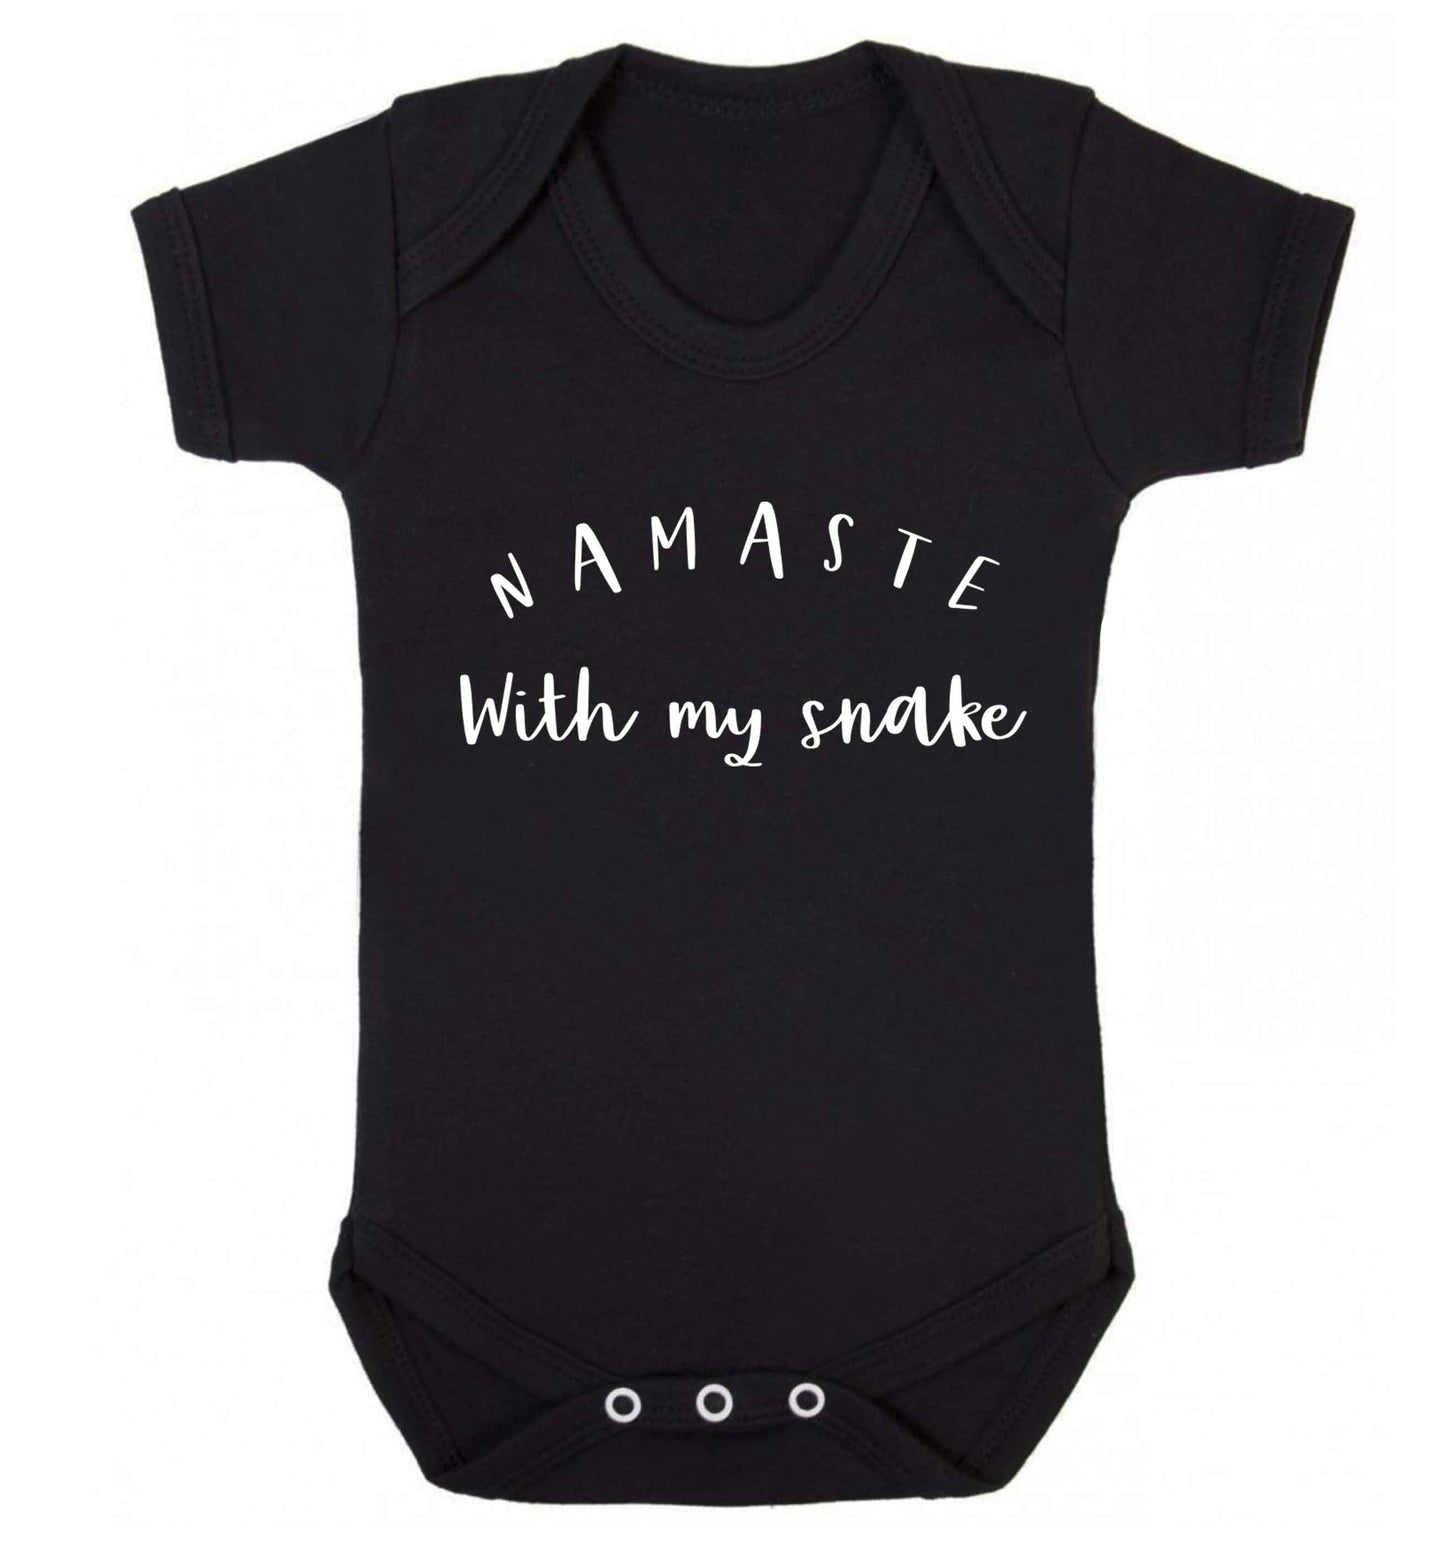 Namaste with my snake Baby Vest black 18-24 months